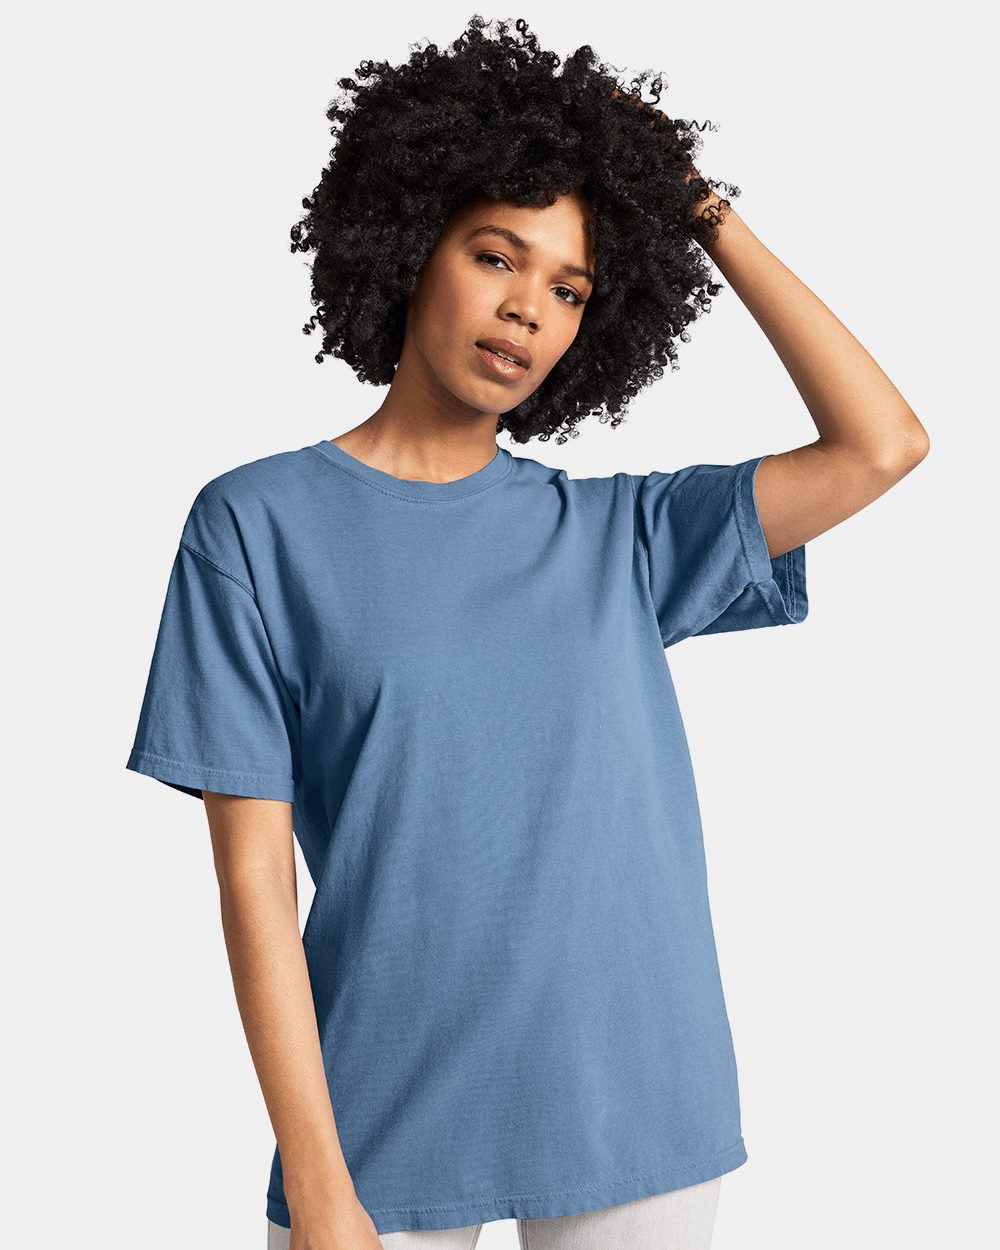 Comfort Colors 1717 - Garment-Dyed Heavyweight T-Shirt